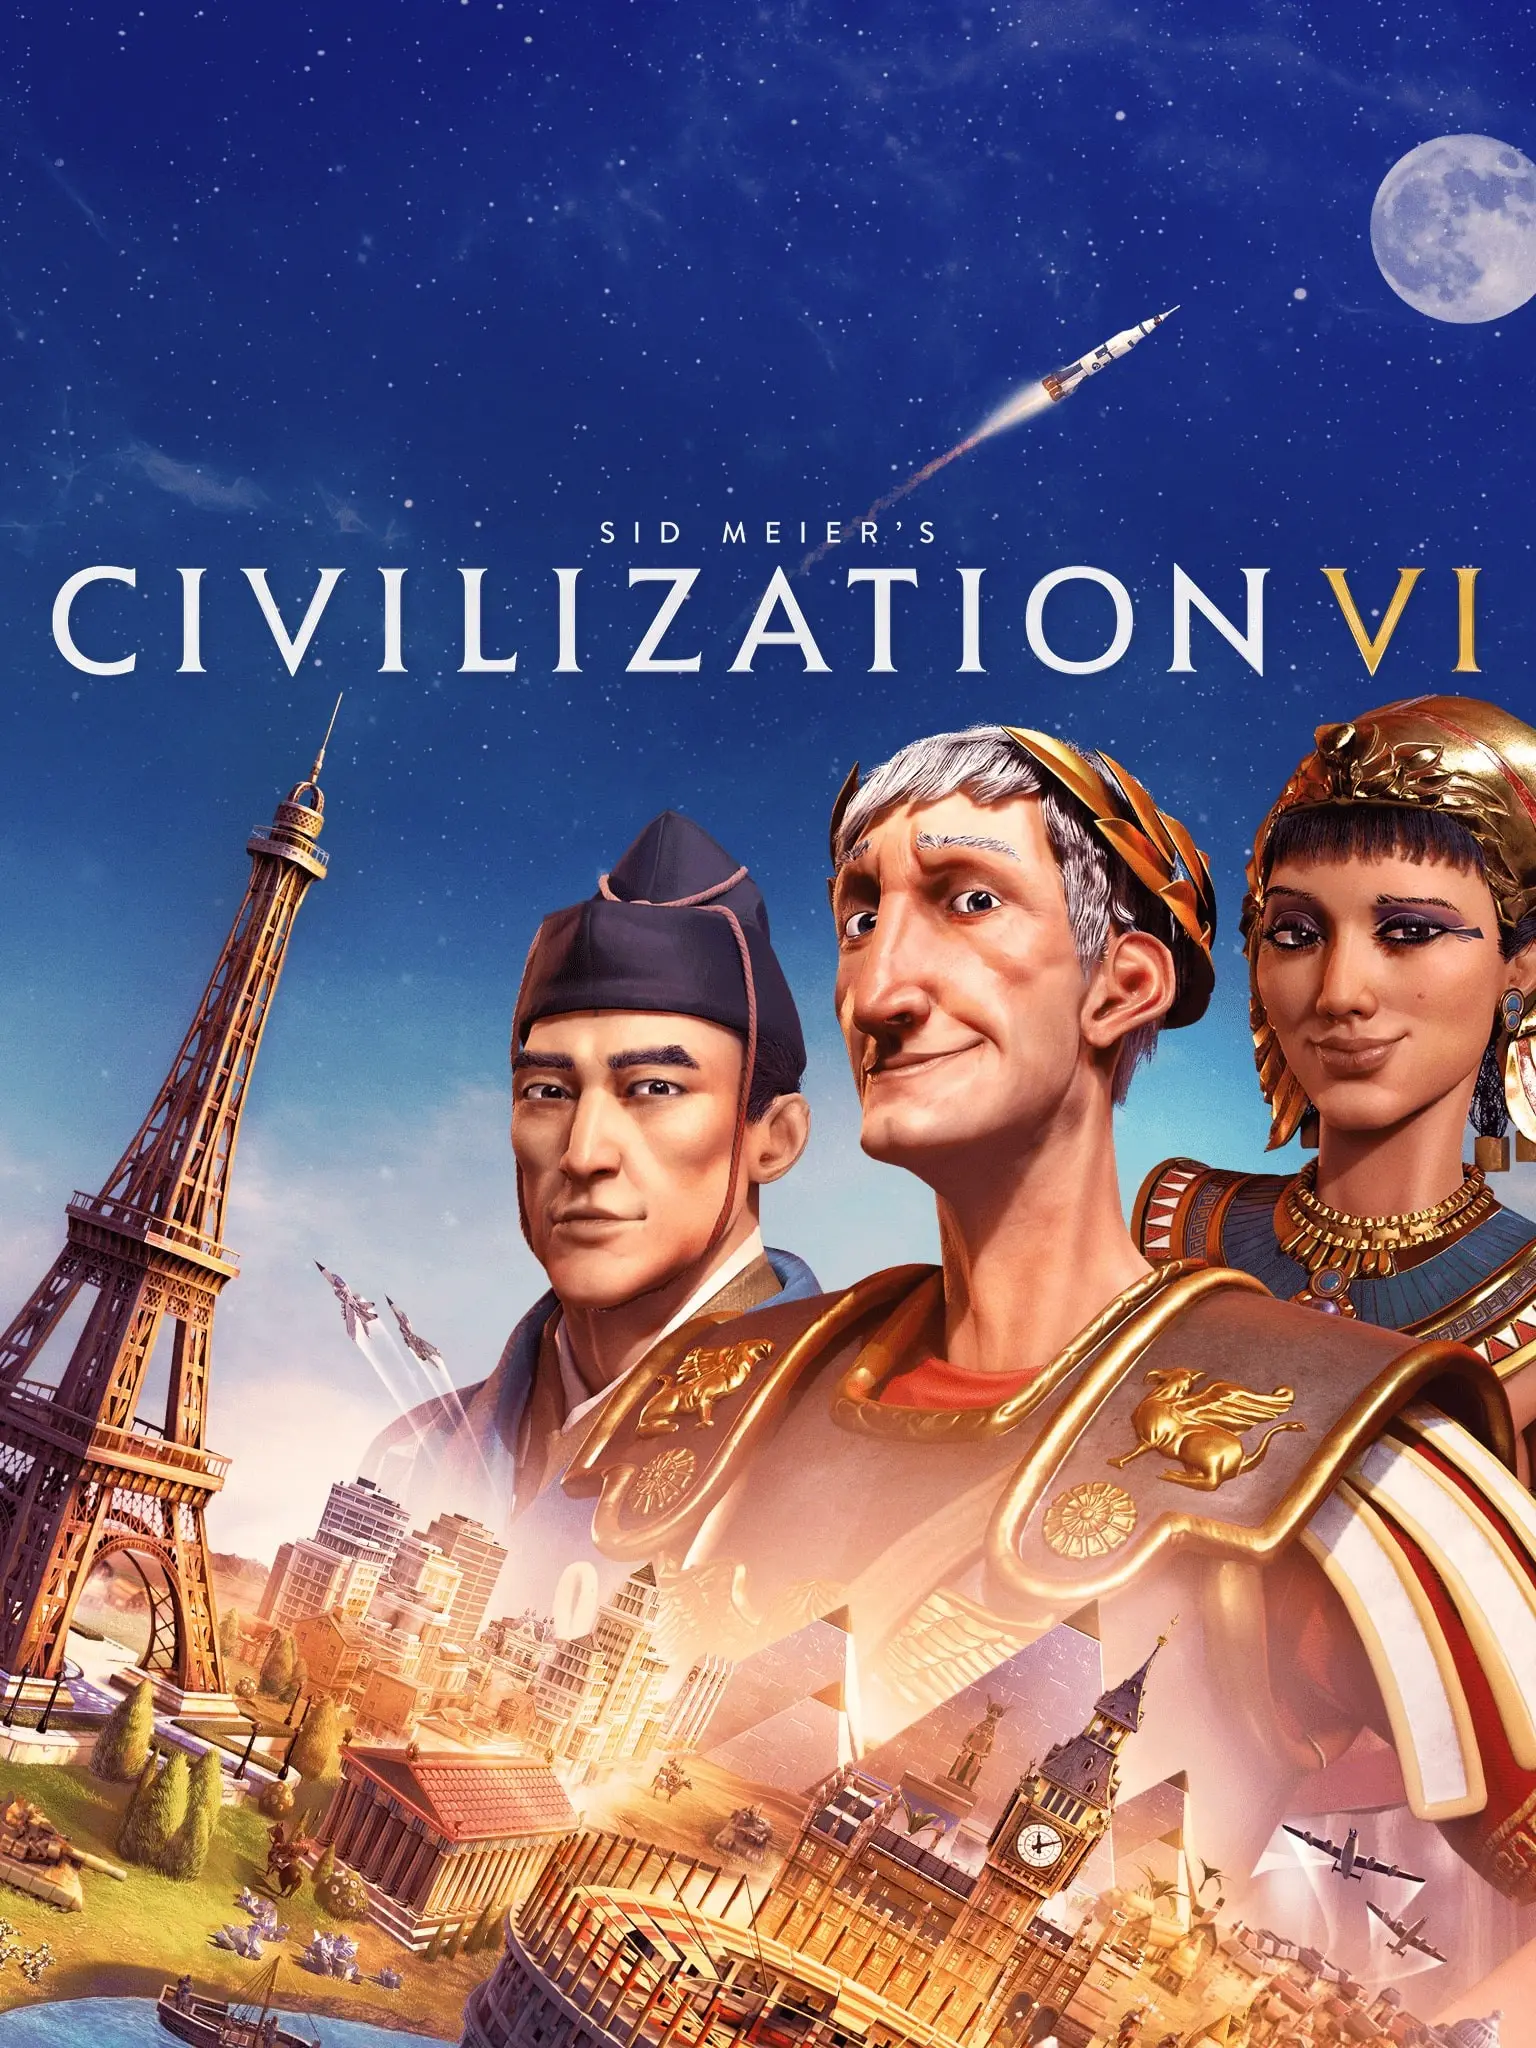 Sid Meier's Civilization VI (EU) (PC / Mac / Linux) - Steam - Digital Code